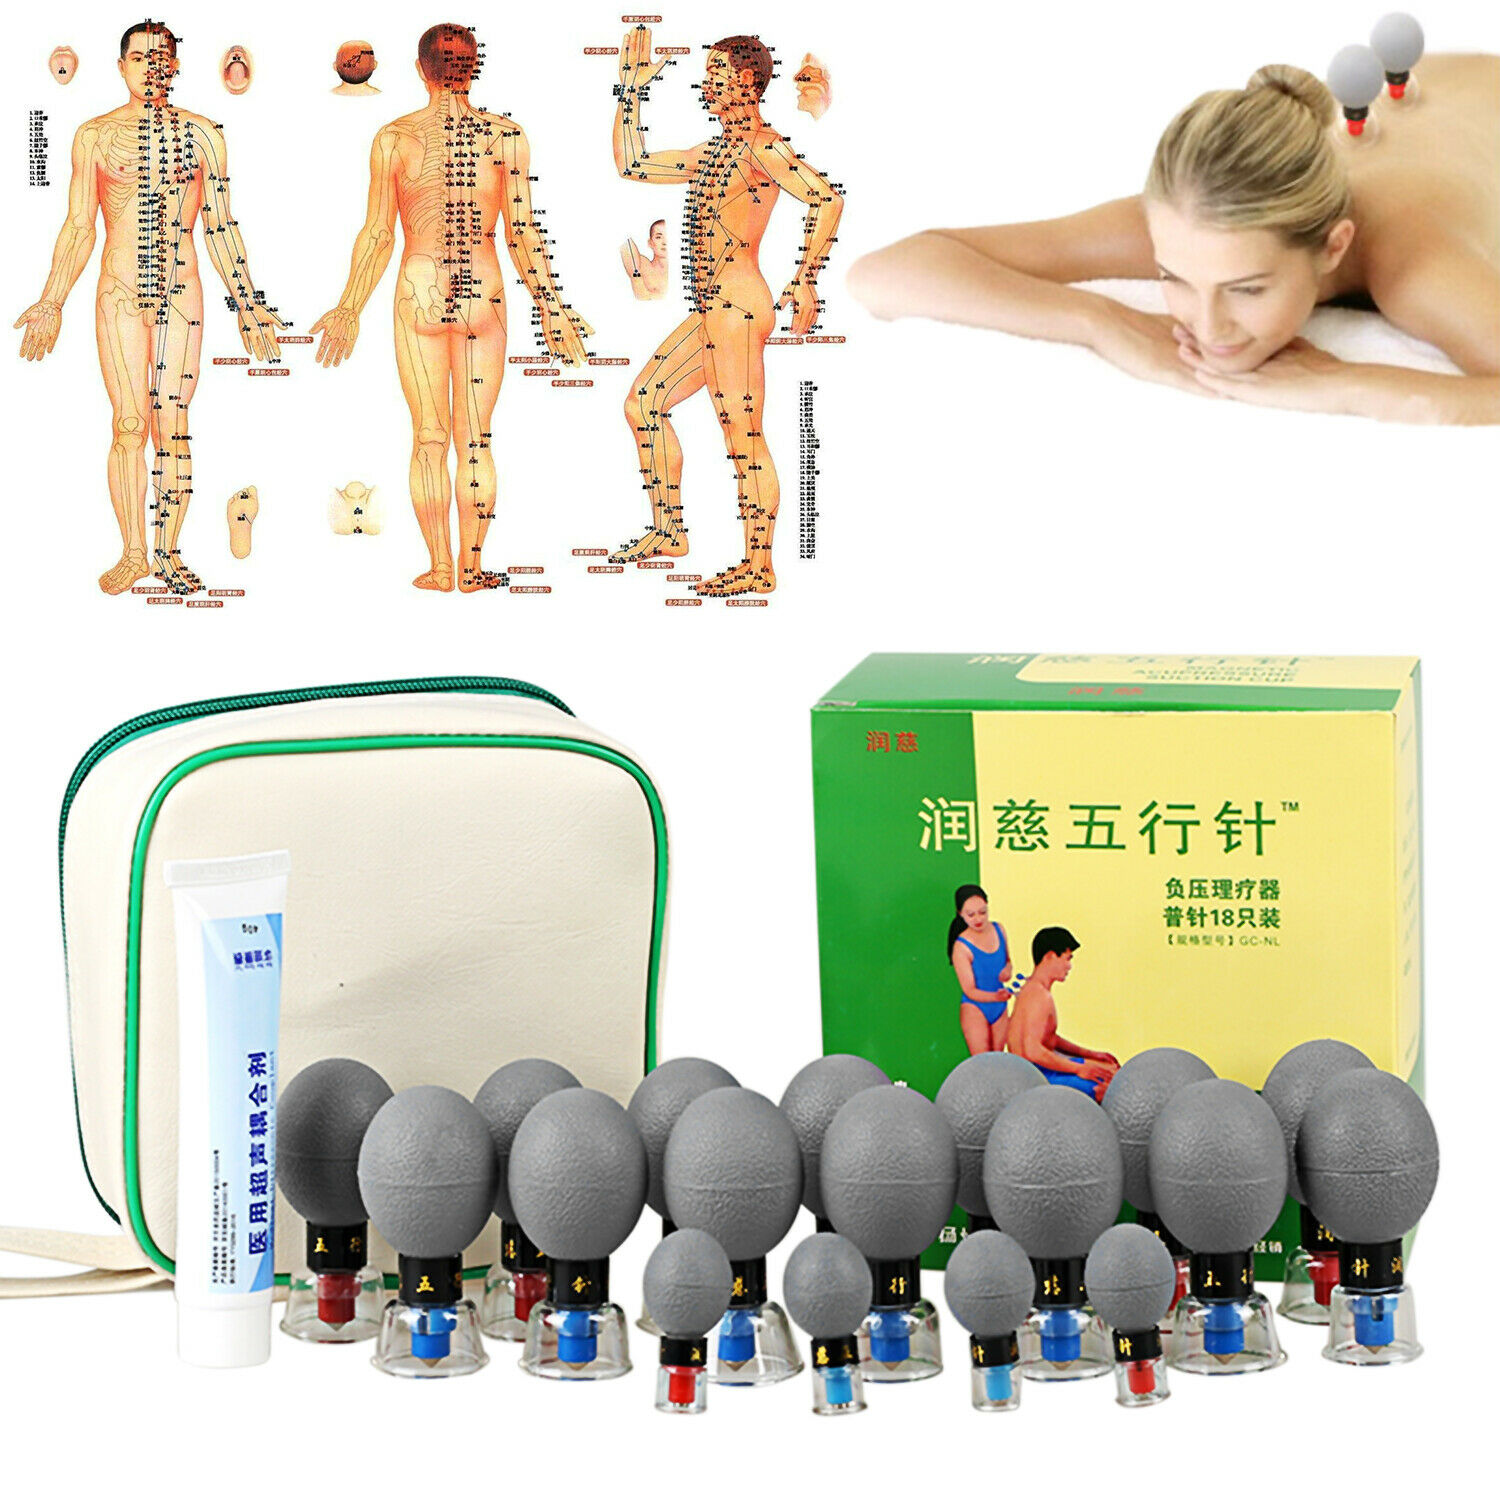 18 / 12 PCS 五行针 Magnetic Acupressure Suction Cup for Self Treatment Wu Xing Zhen